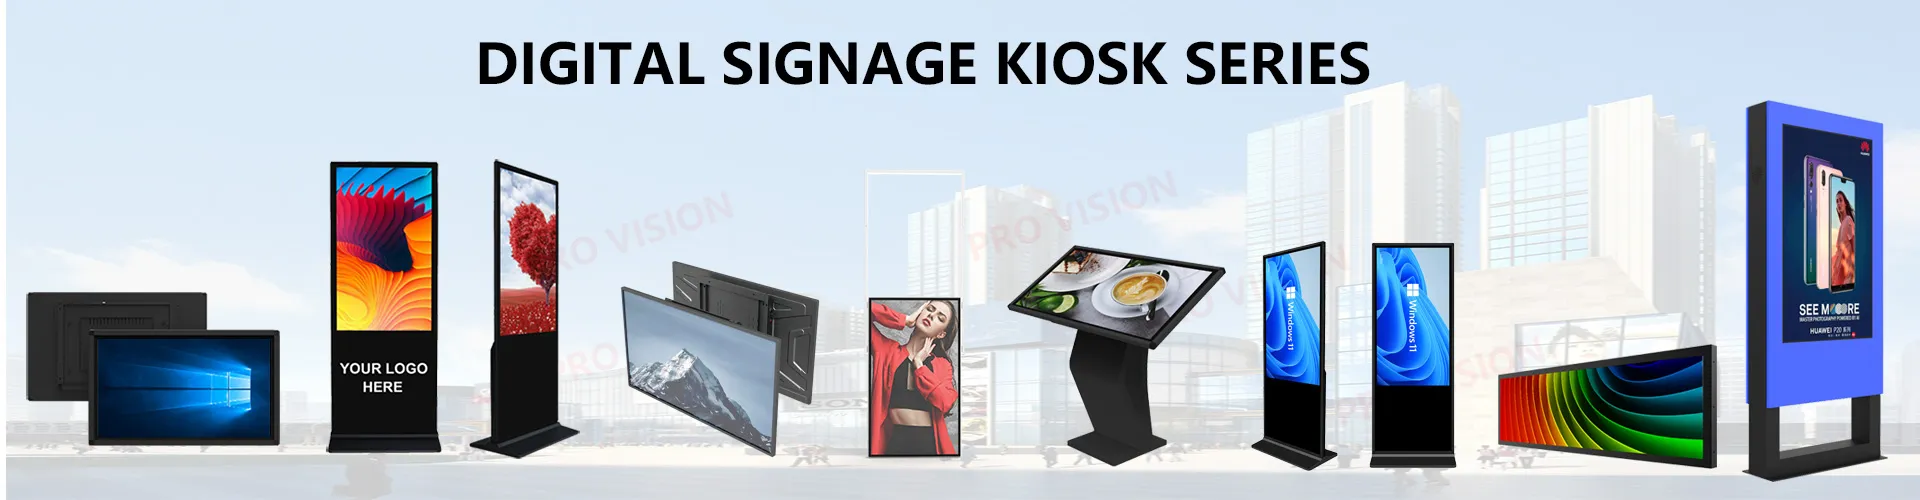 55 inch android windows digital signage kiosk